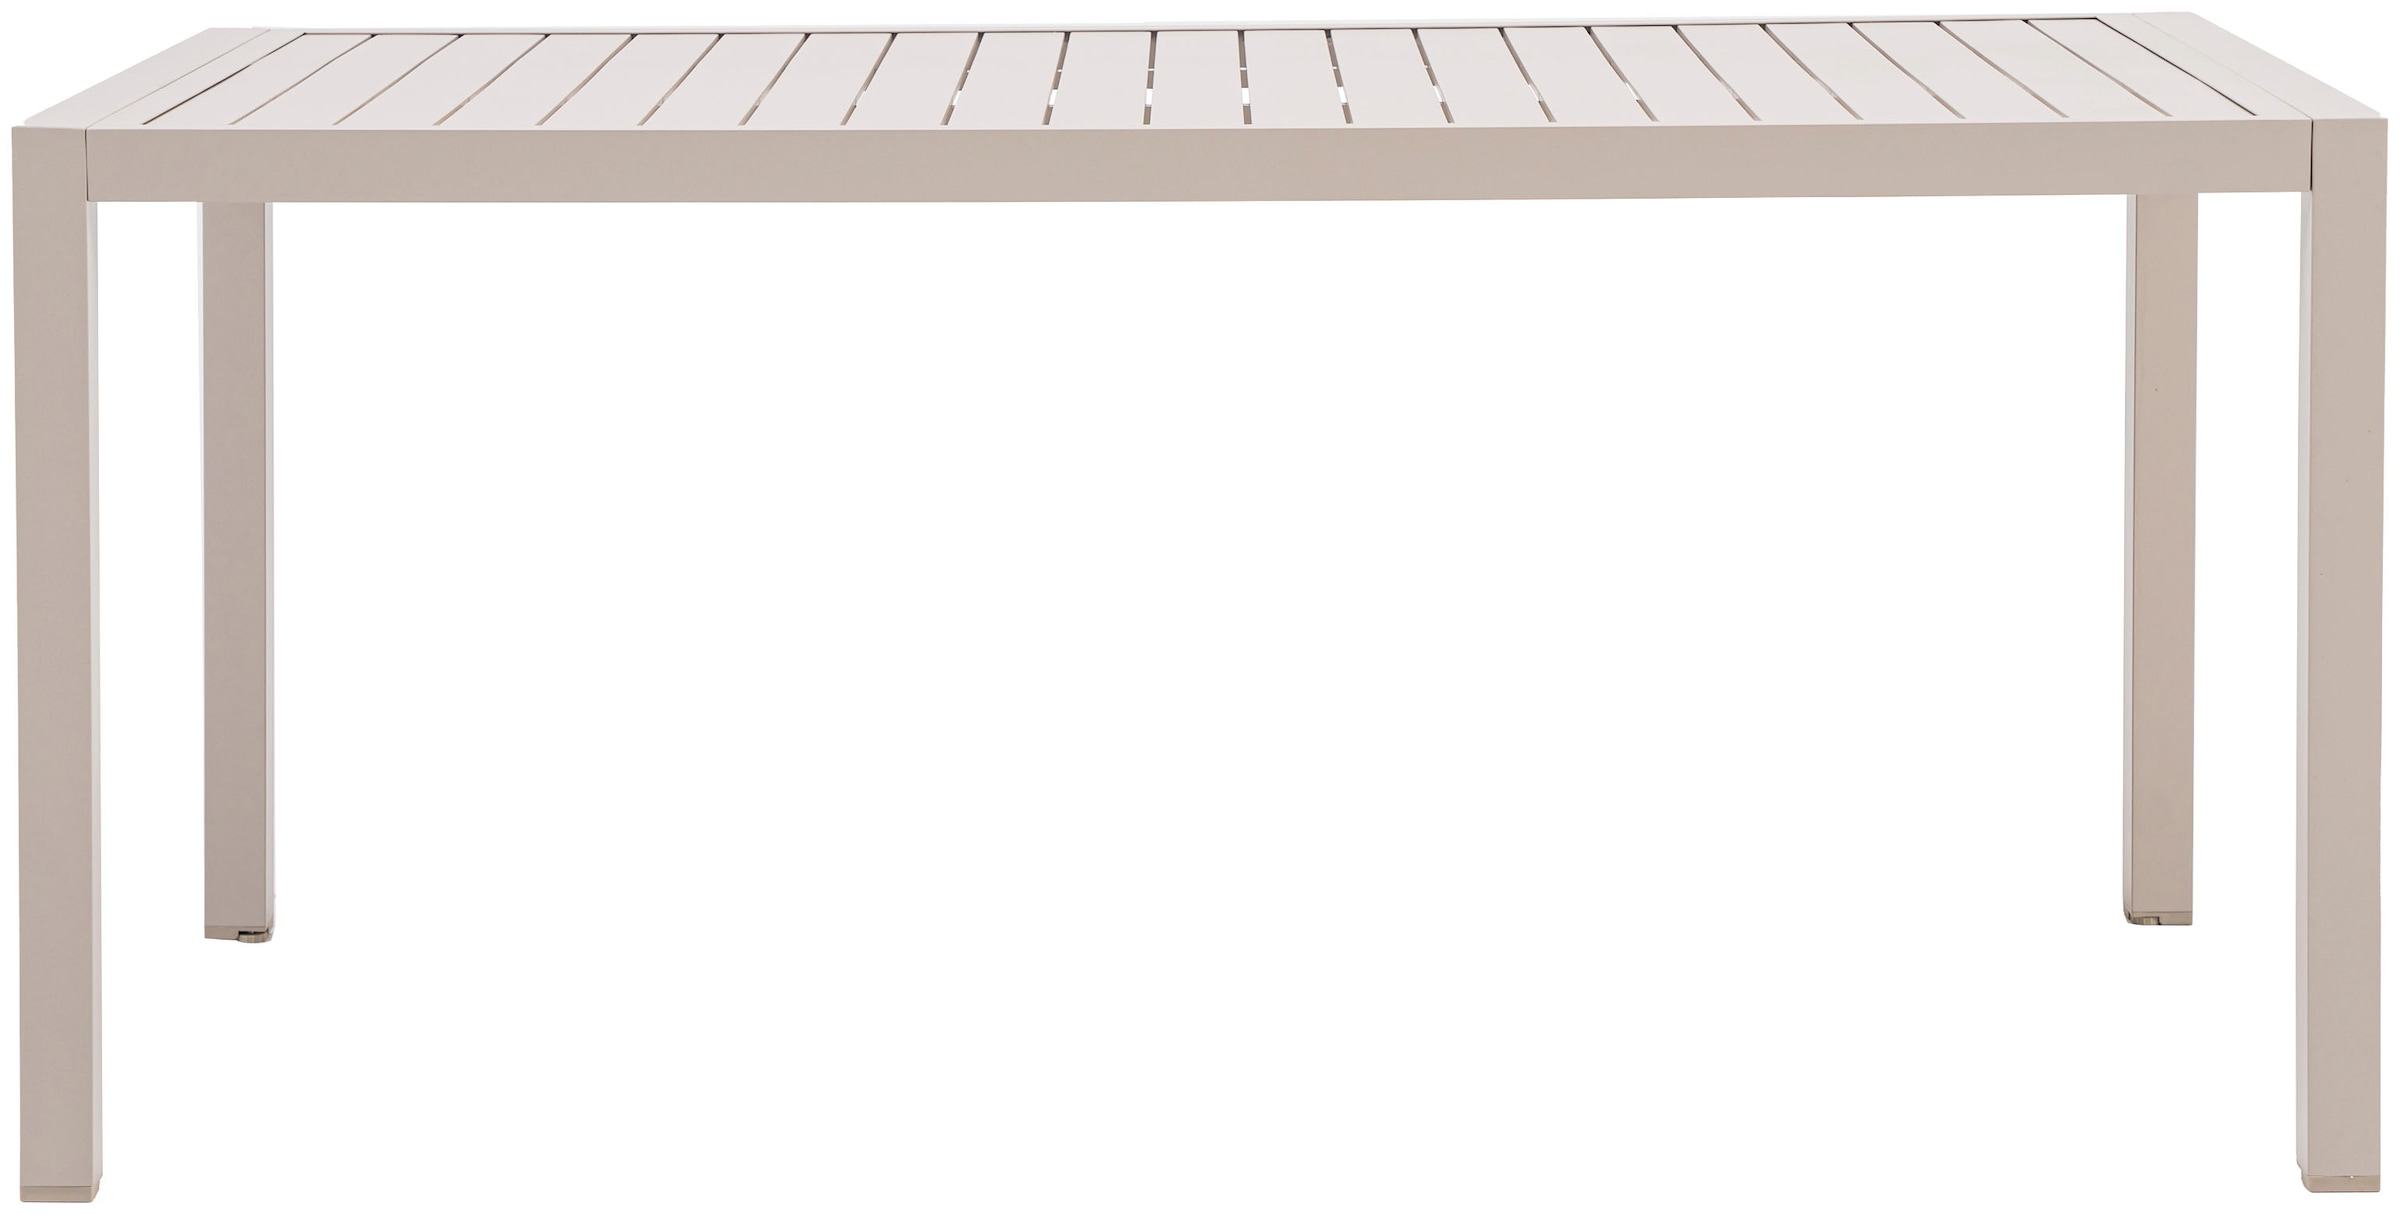 KONIFERA Garten-Essgruppe »Messina«, (Set, 7 tlg., 6x Sessel, 1x Tisch 160x90x74 cm, Aluminium, Textilgewebe), klappbar, 7-fach verstellbare Rückenlehne, Tischplatte aus Alulatten